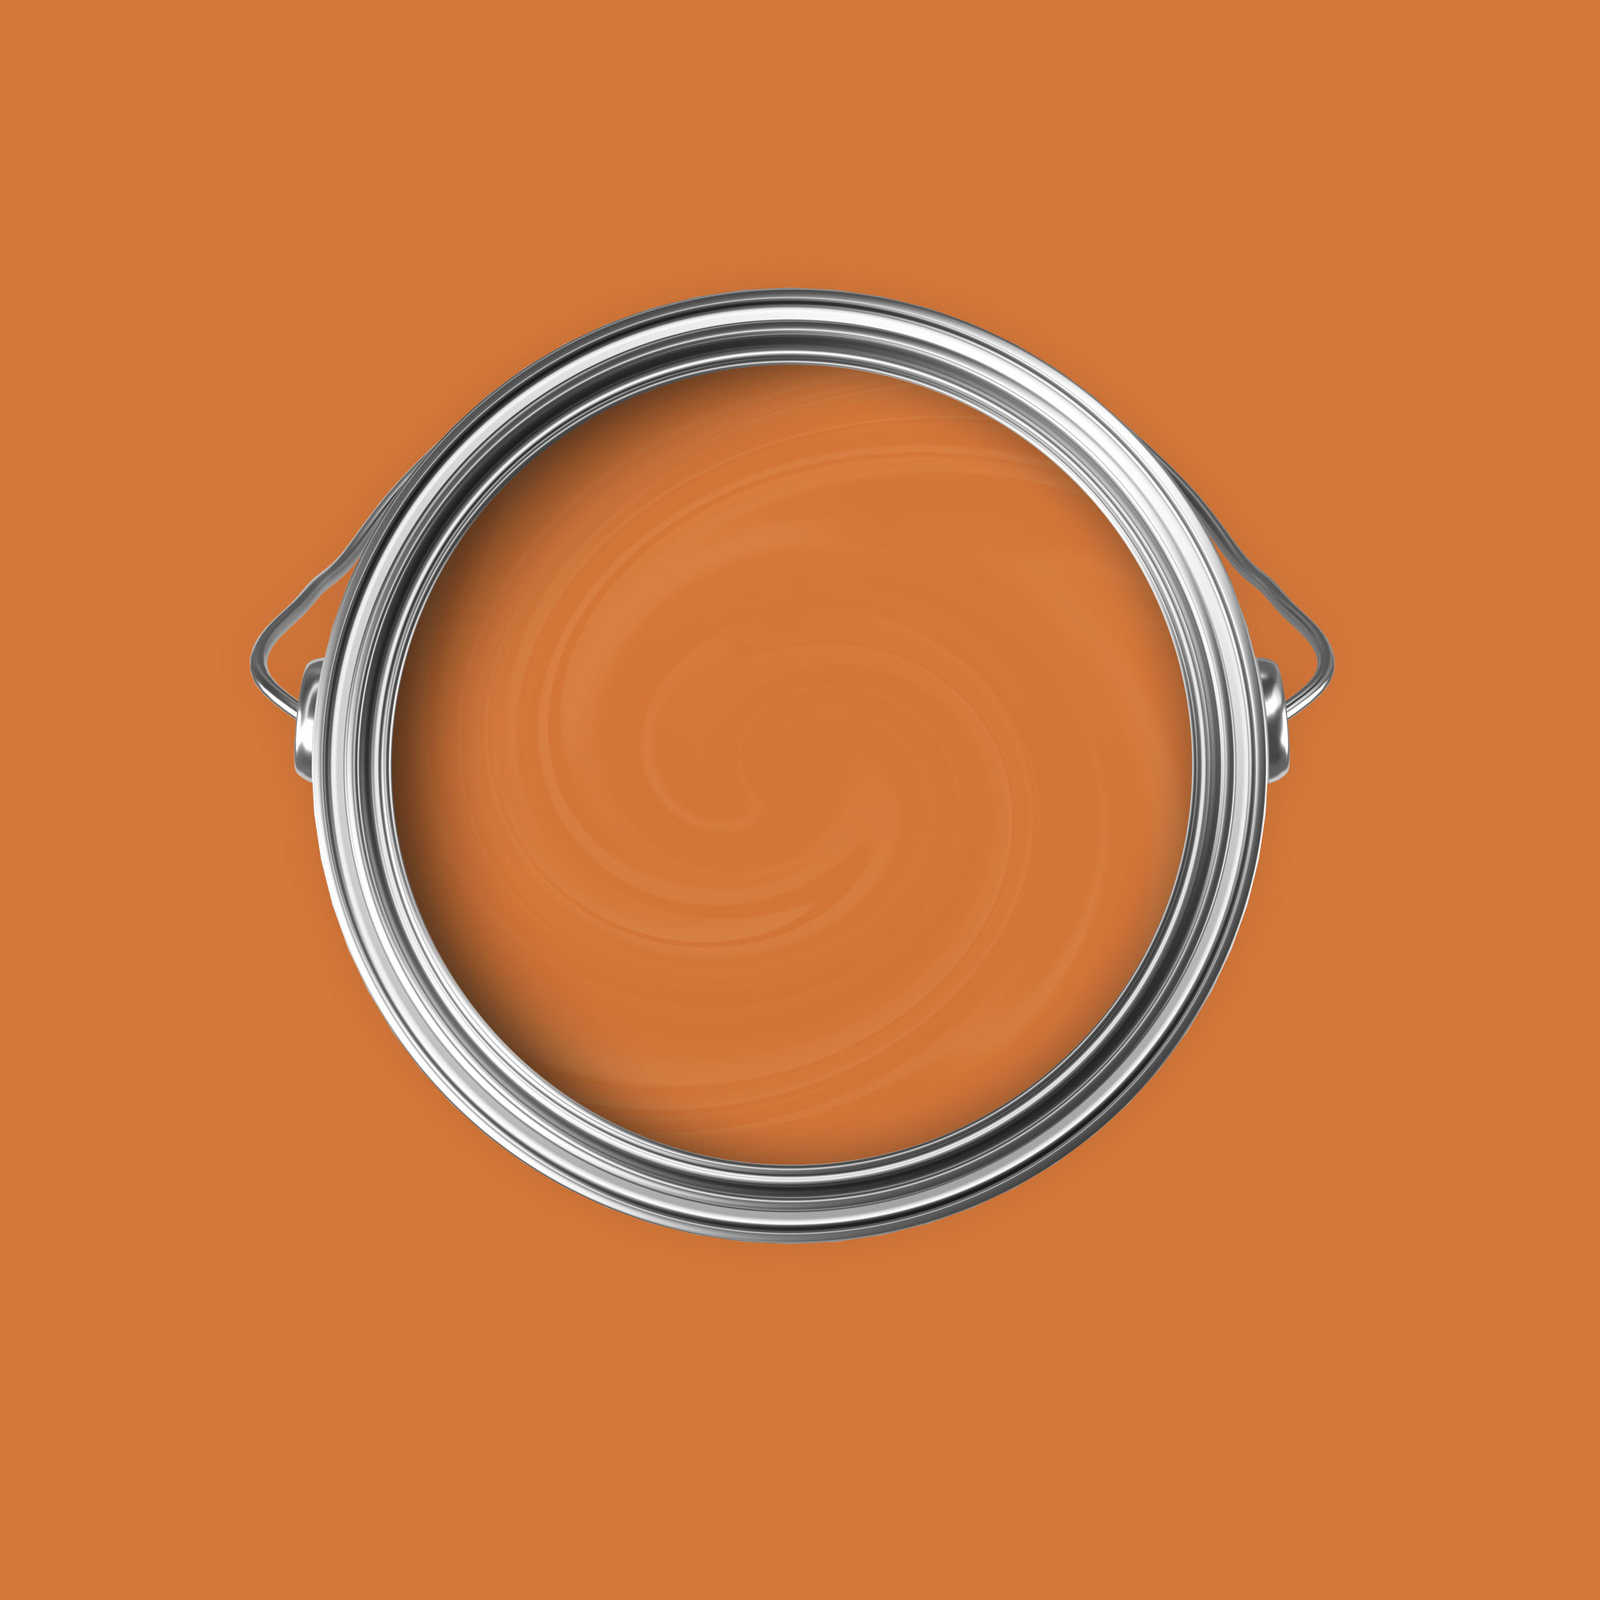             Premium Wandfarbe warmherziges Orange »Pretty Peach« NW903 – 5 Liter
        